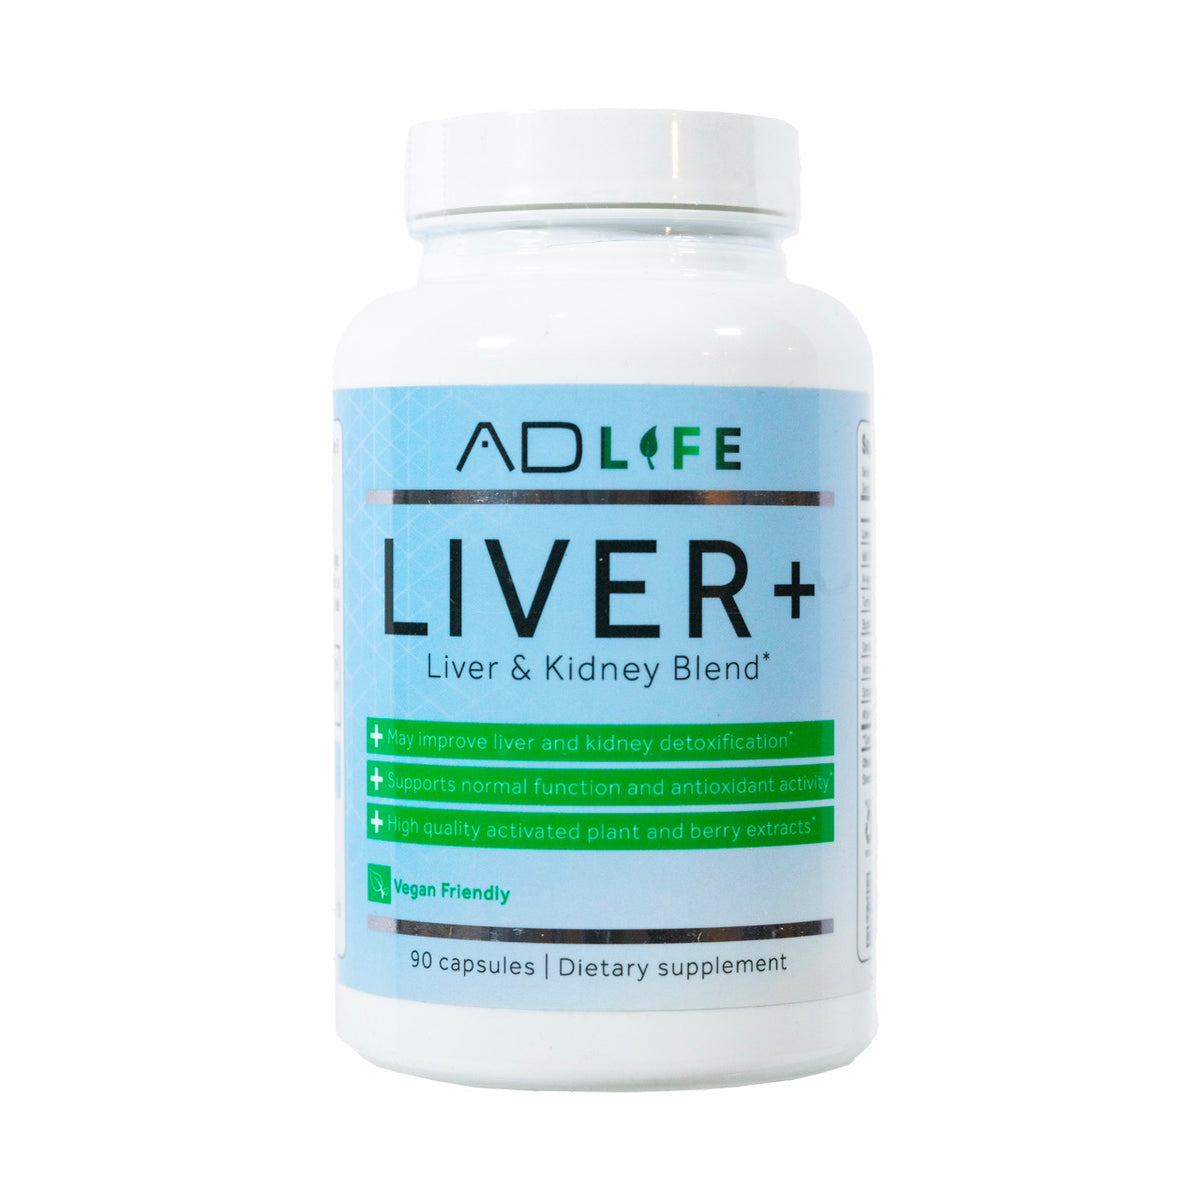 Liver+Liver Support- AD Life